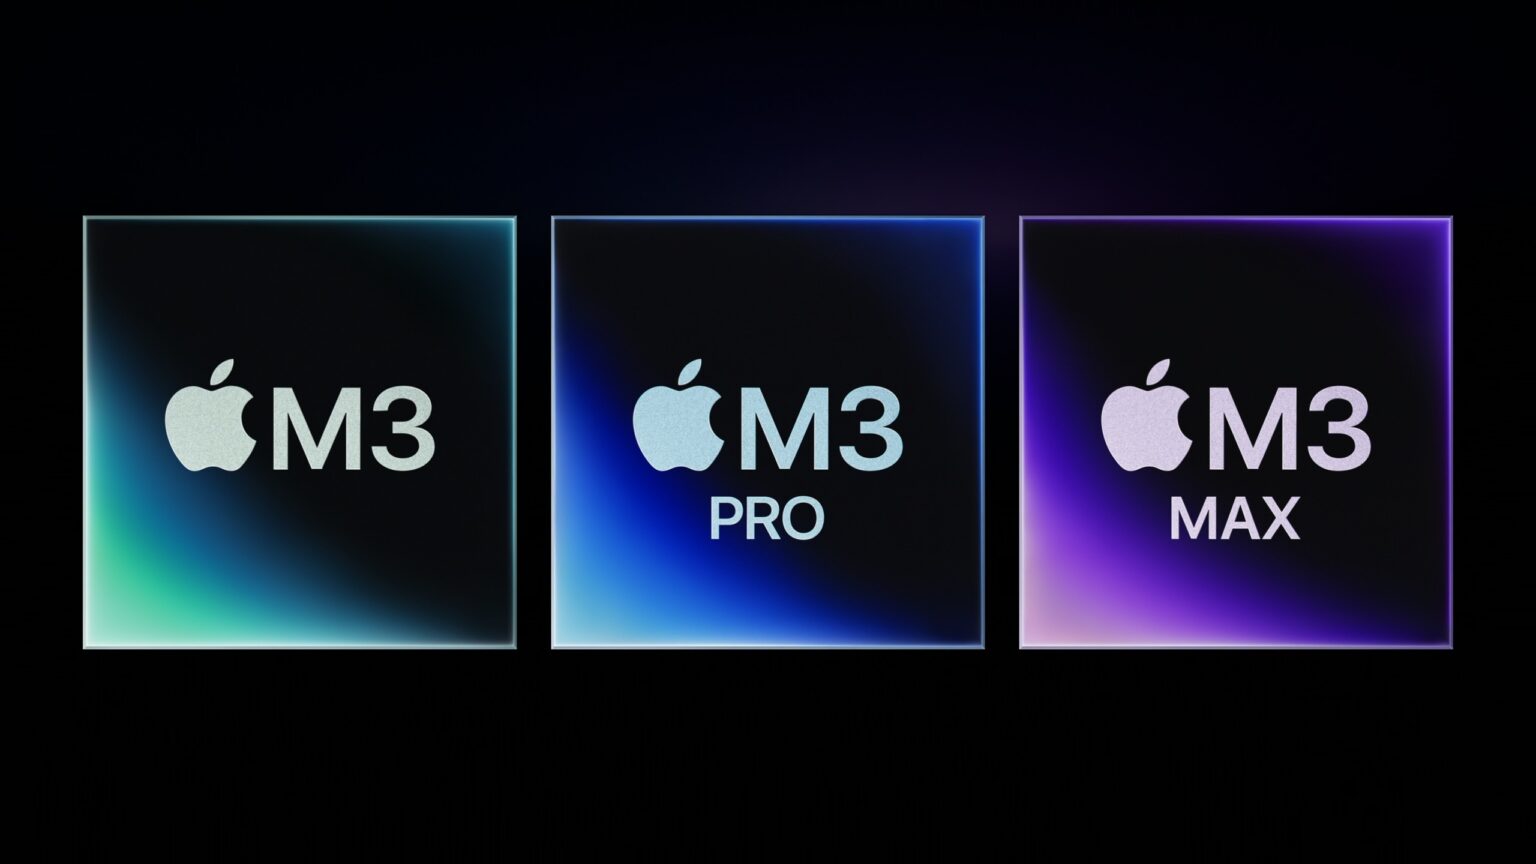 Apple M3 chip family